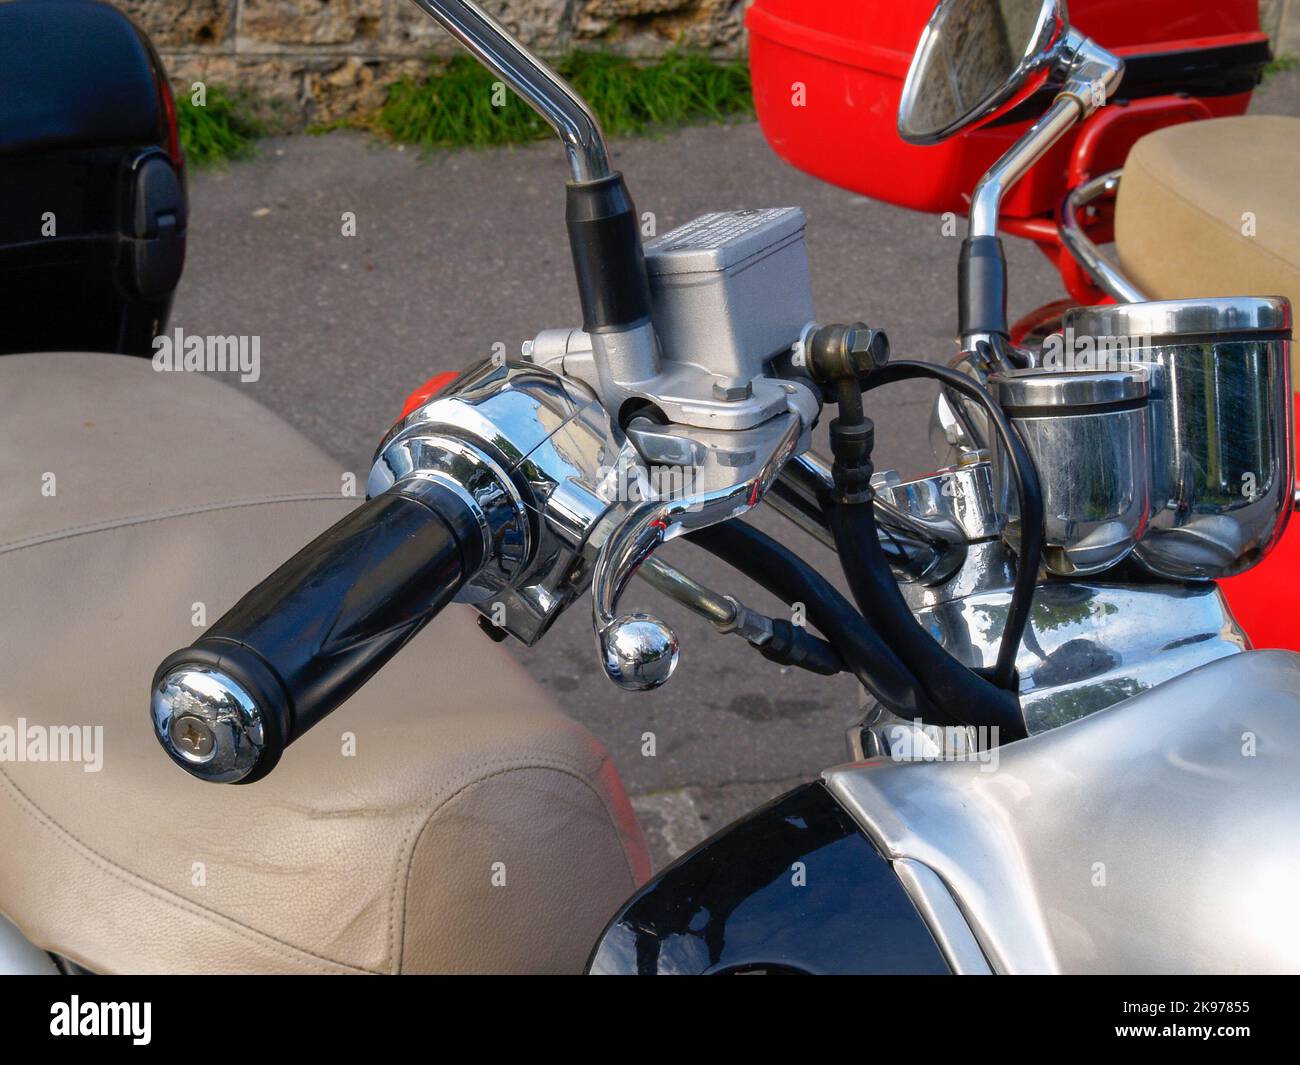 Motorrad handbremse -Fotos und -Bildmaterial in hoher Auflösung